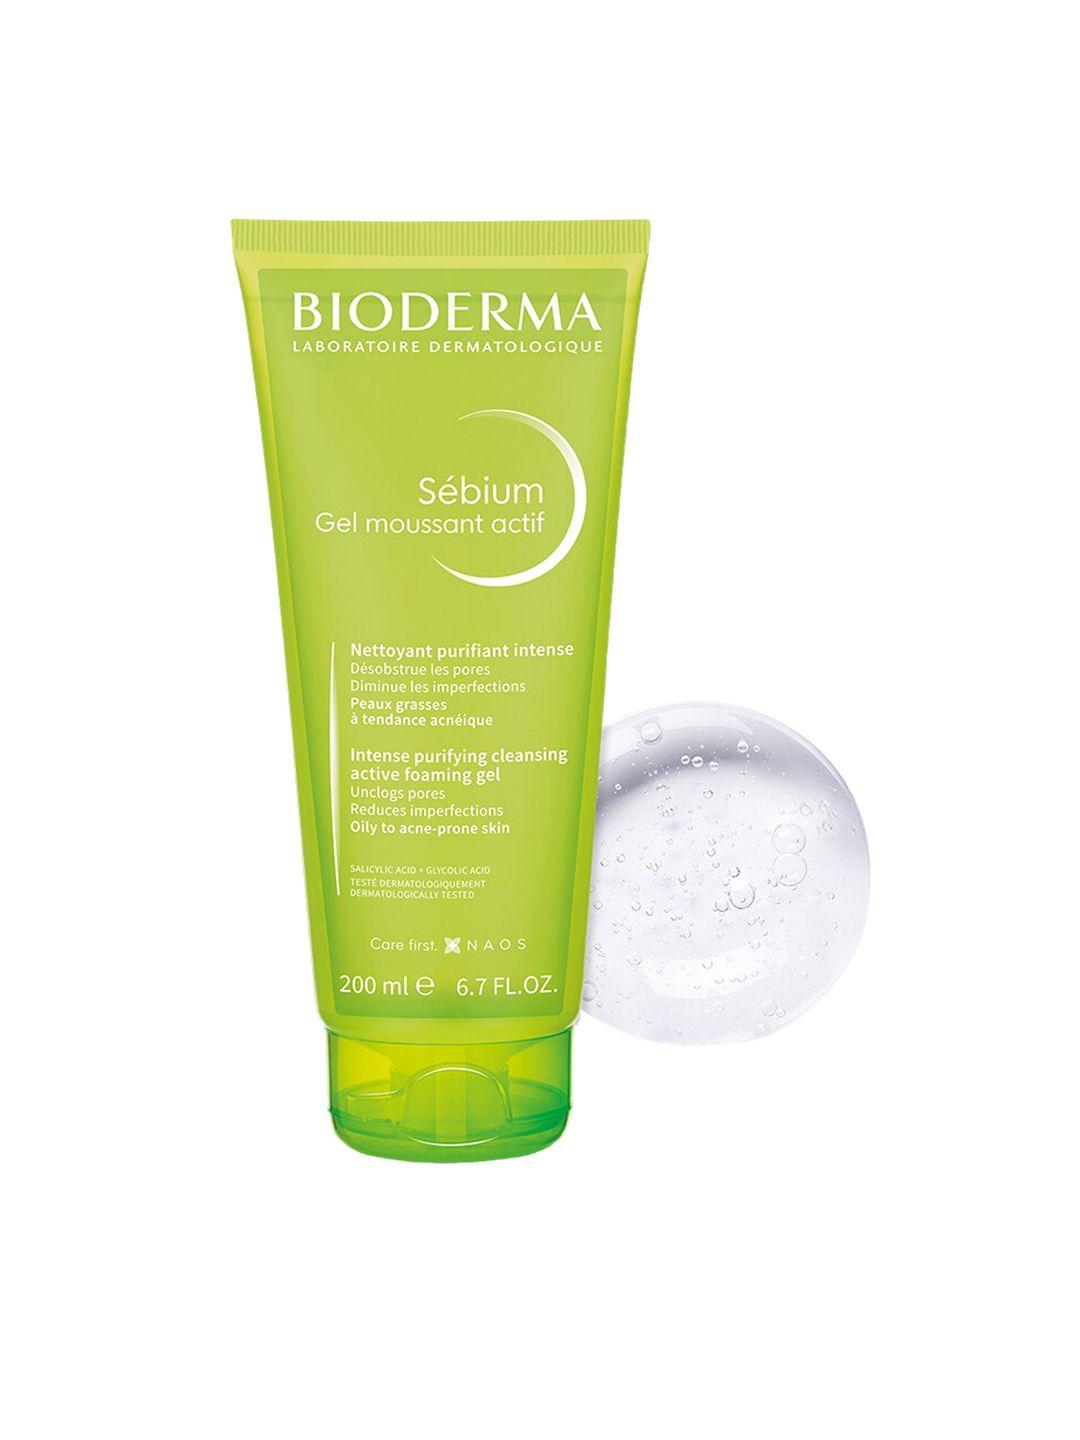 bioderma sebium gel moussant actif intense purifying cleansing foaming gel - 200 ml